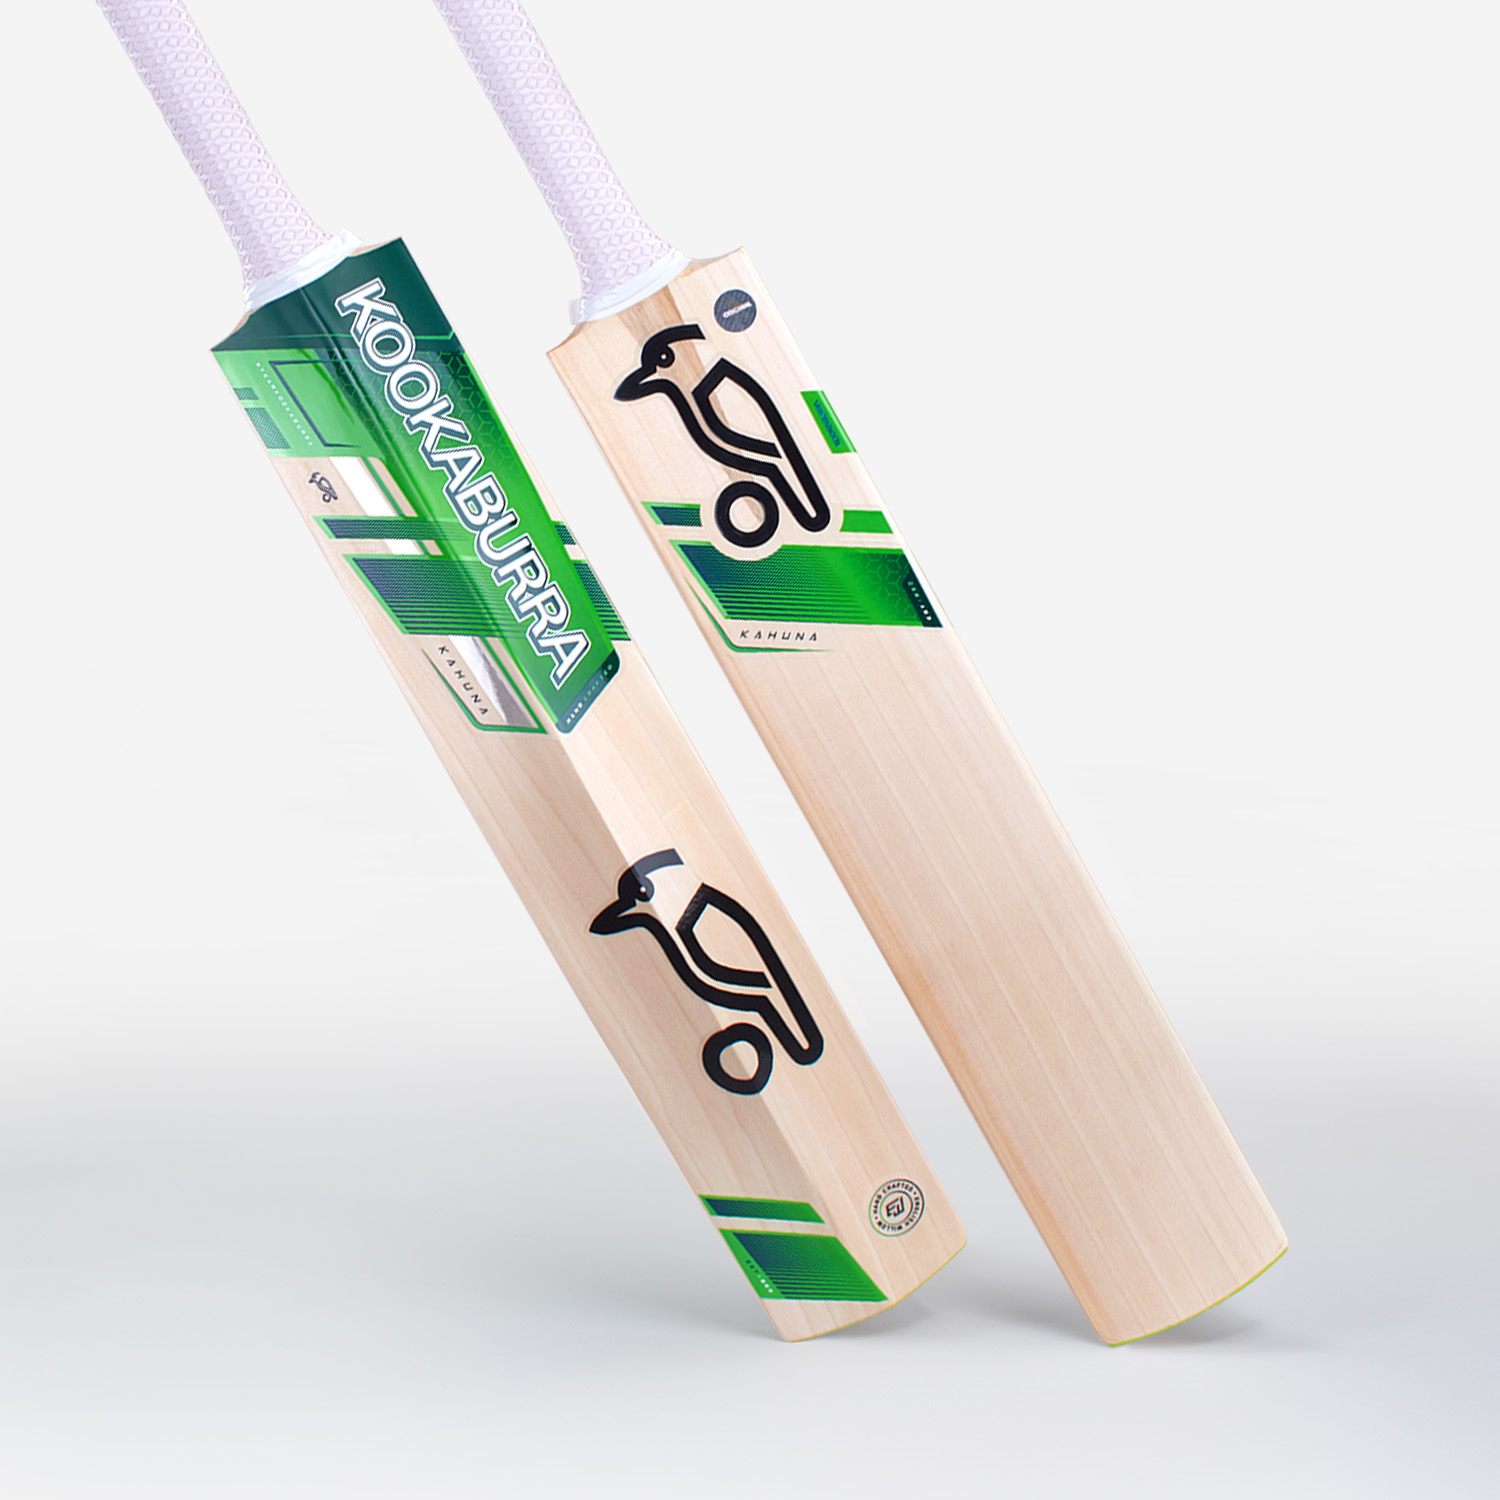 Kahuna 2.1 Cricket Bat